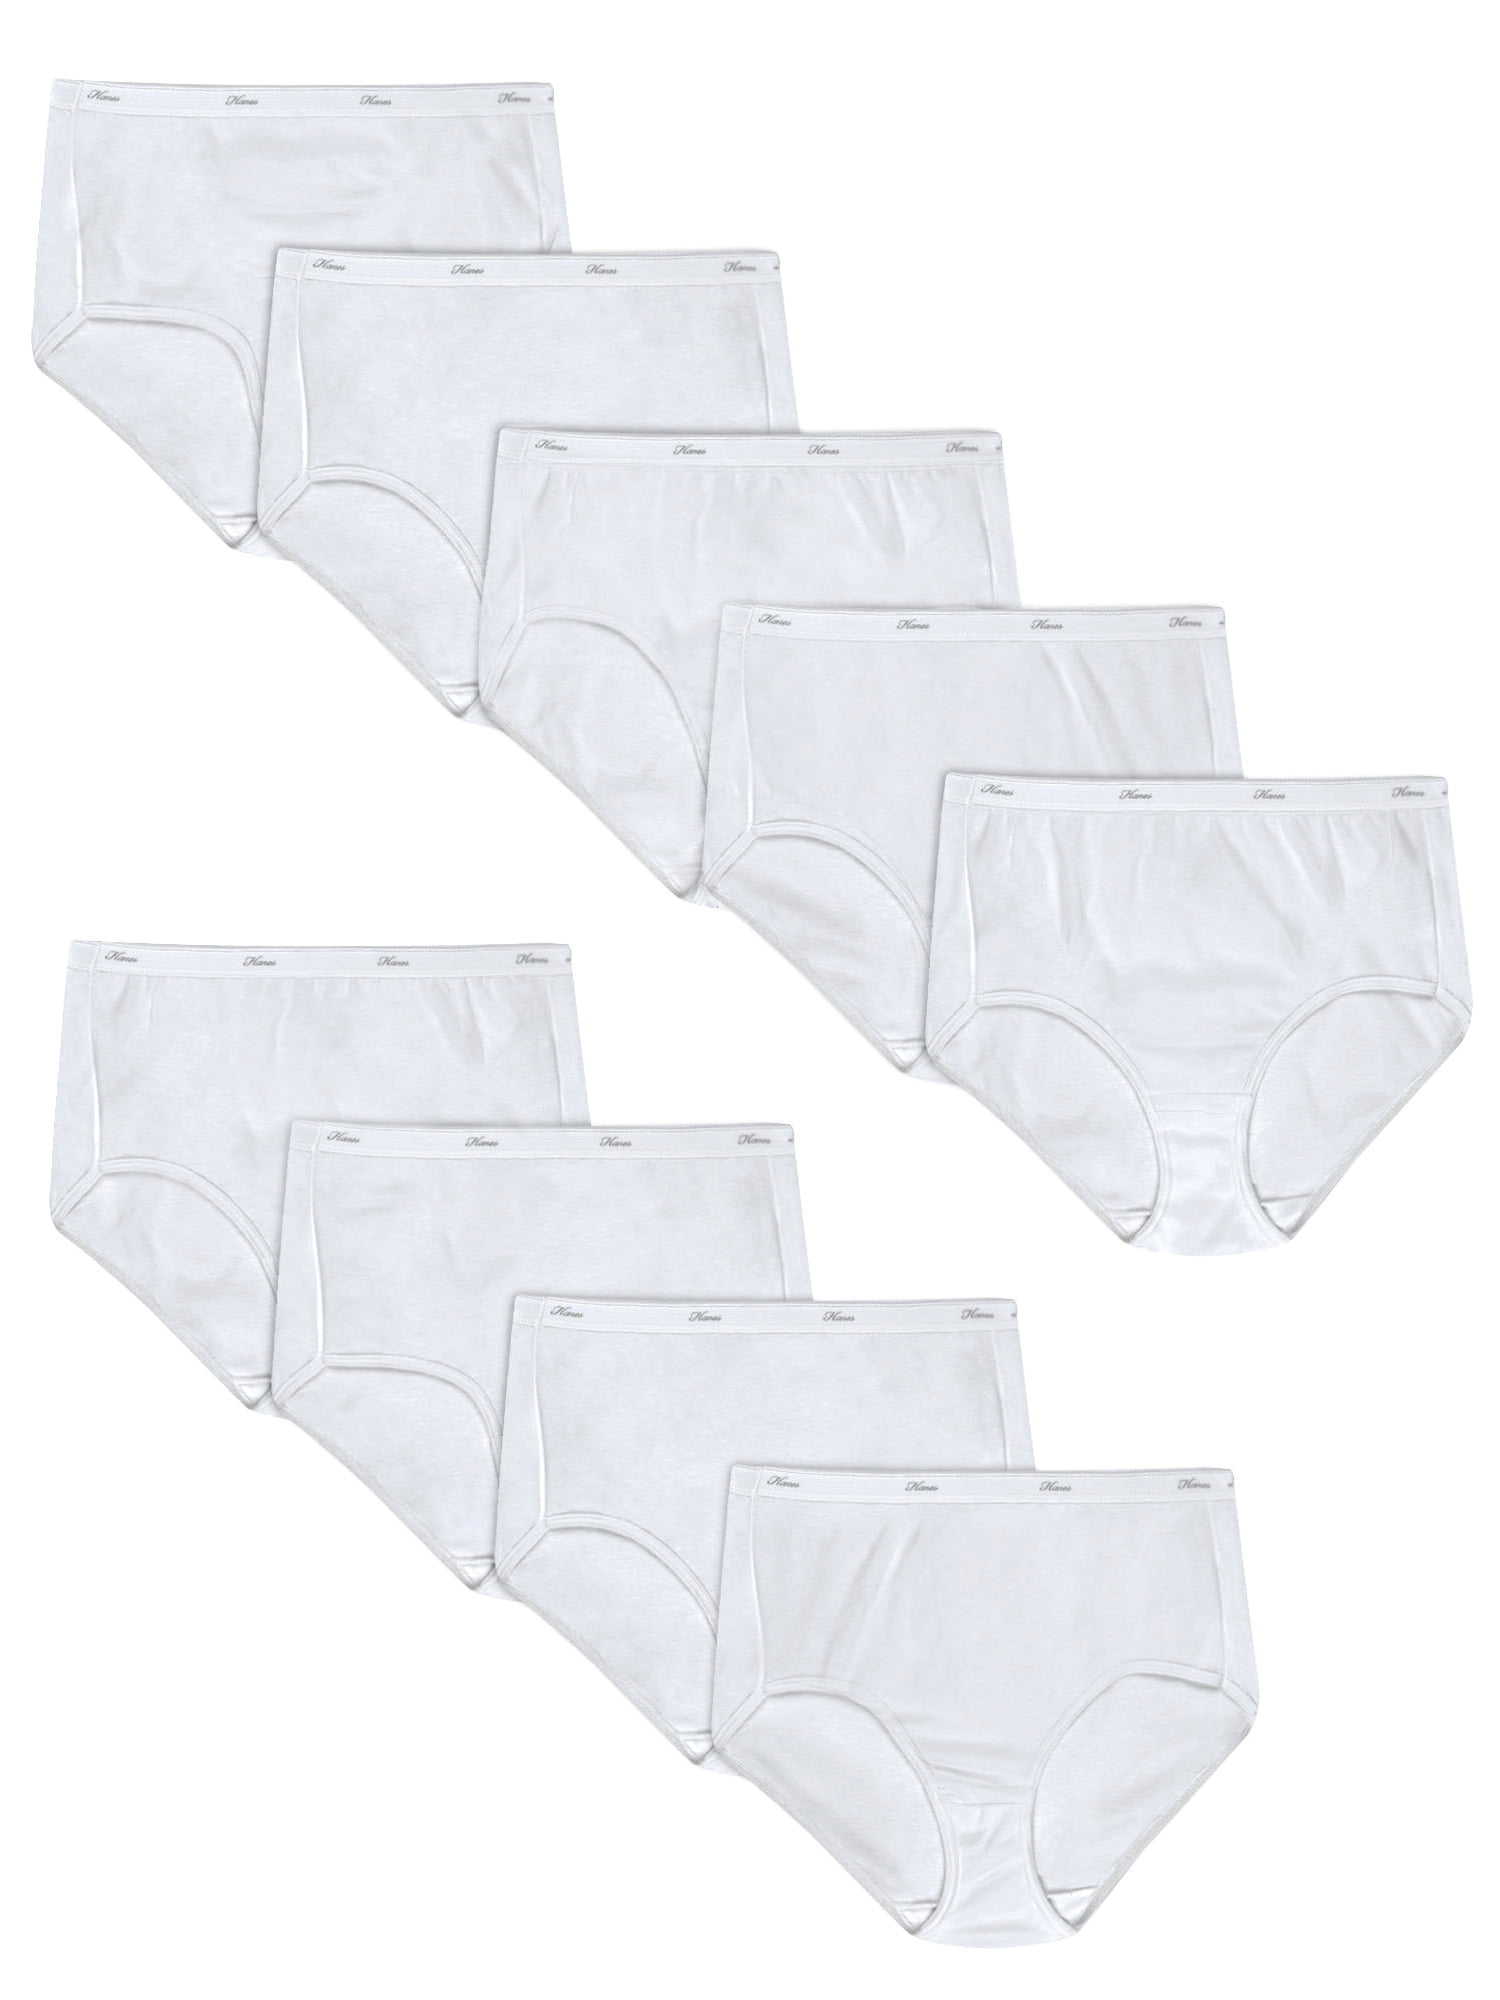 Hanes White Women Panties 100% Cotton Underwear Regular & Plus